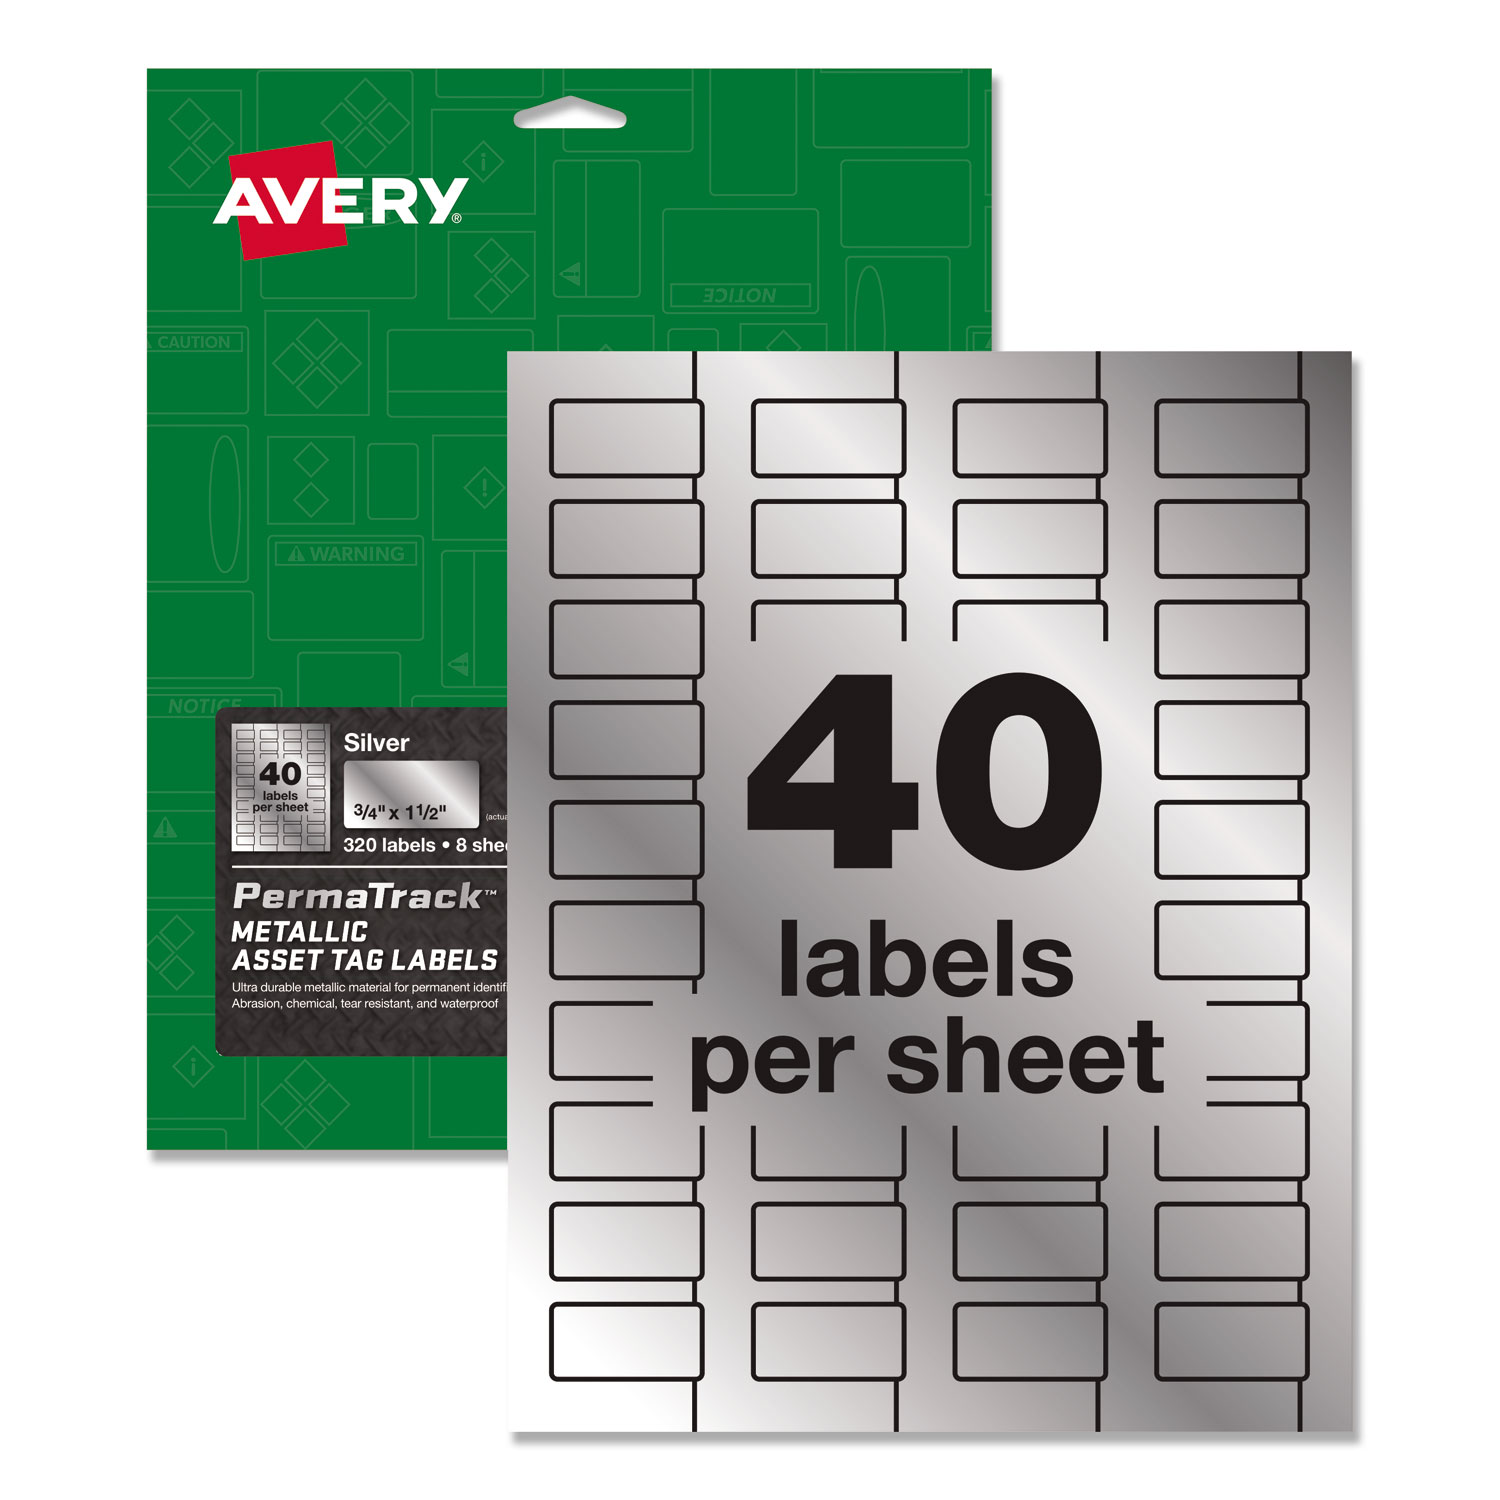  Avery 61523 PermaTrack Metallic Asset Tag Labels, Laser Printers, 0.75 x 1.5, Metallic Silver, 40/Sheet, 8 Sheets/Pack (AVE61523) 